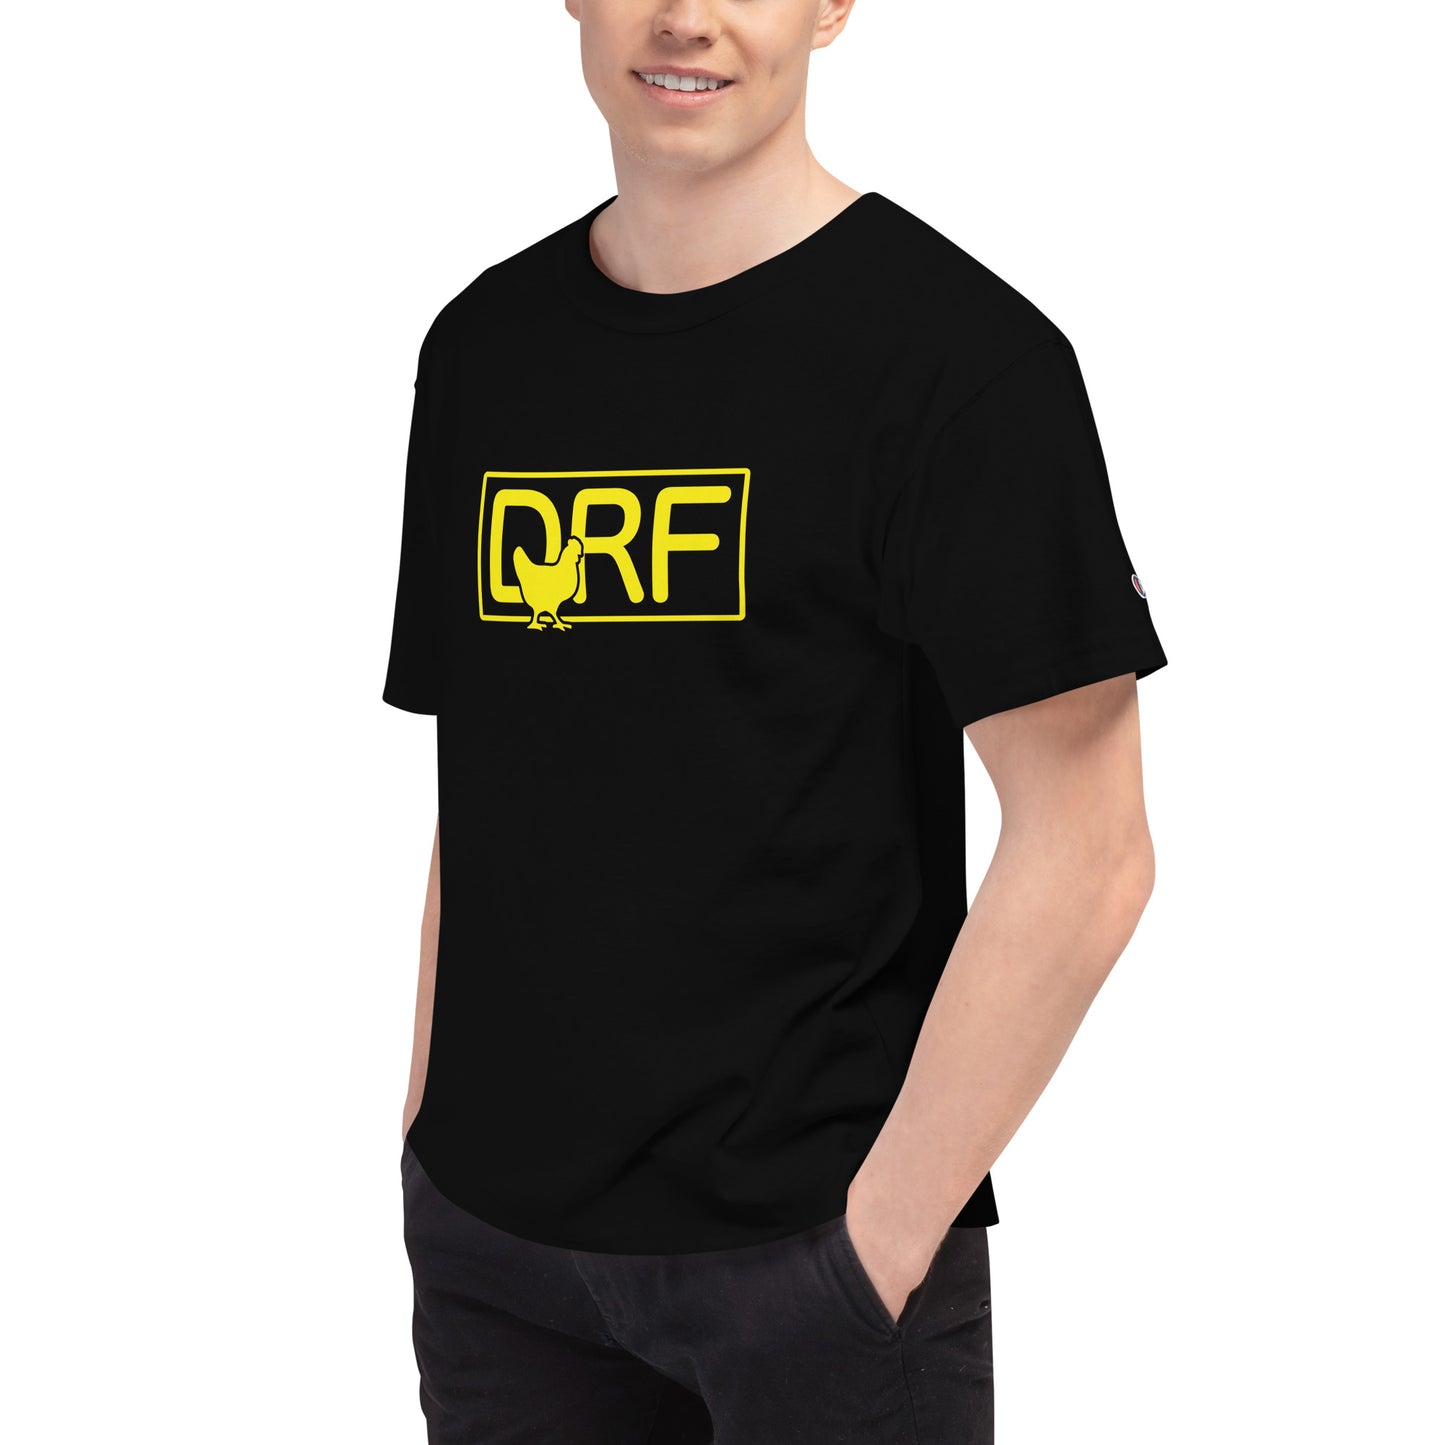 DRF Abbreviated Chicken Logo Champion T-Shirt